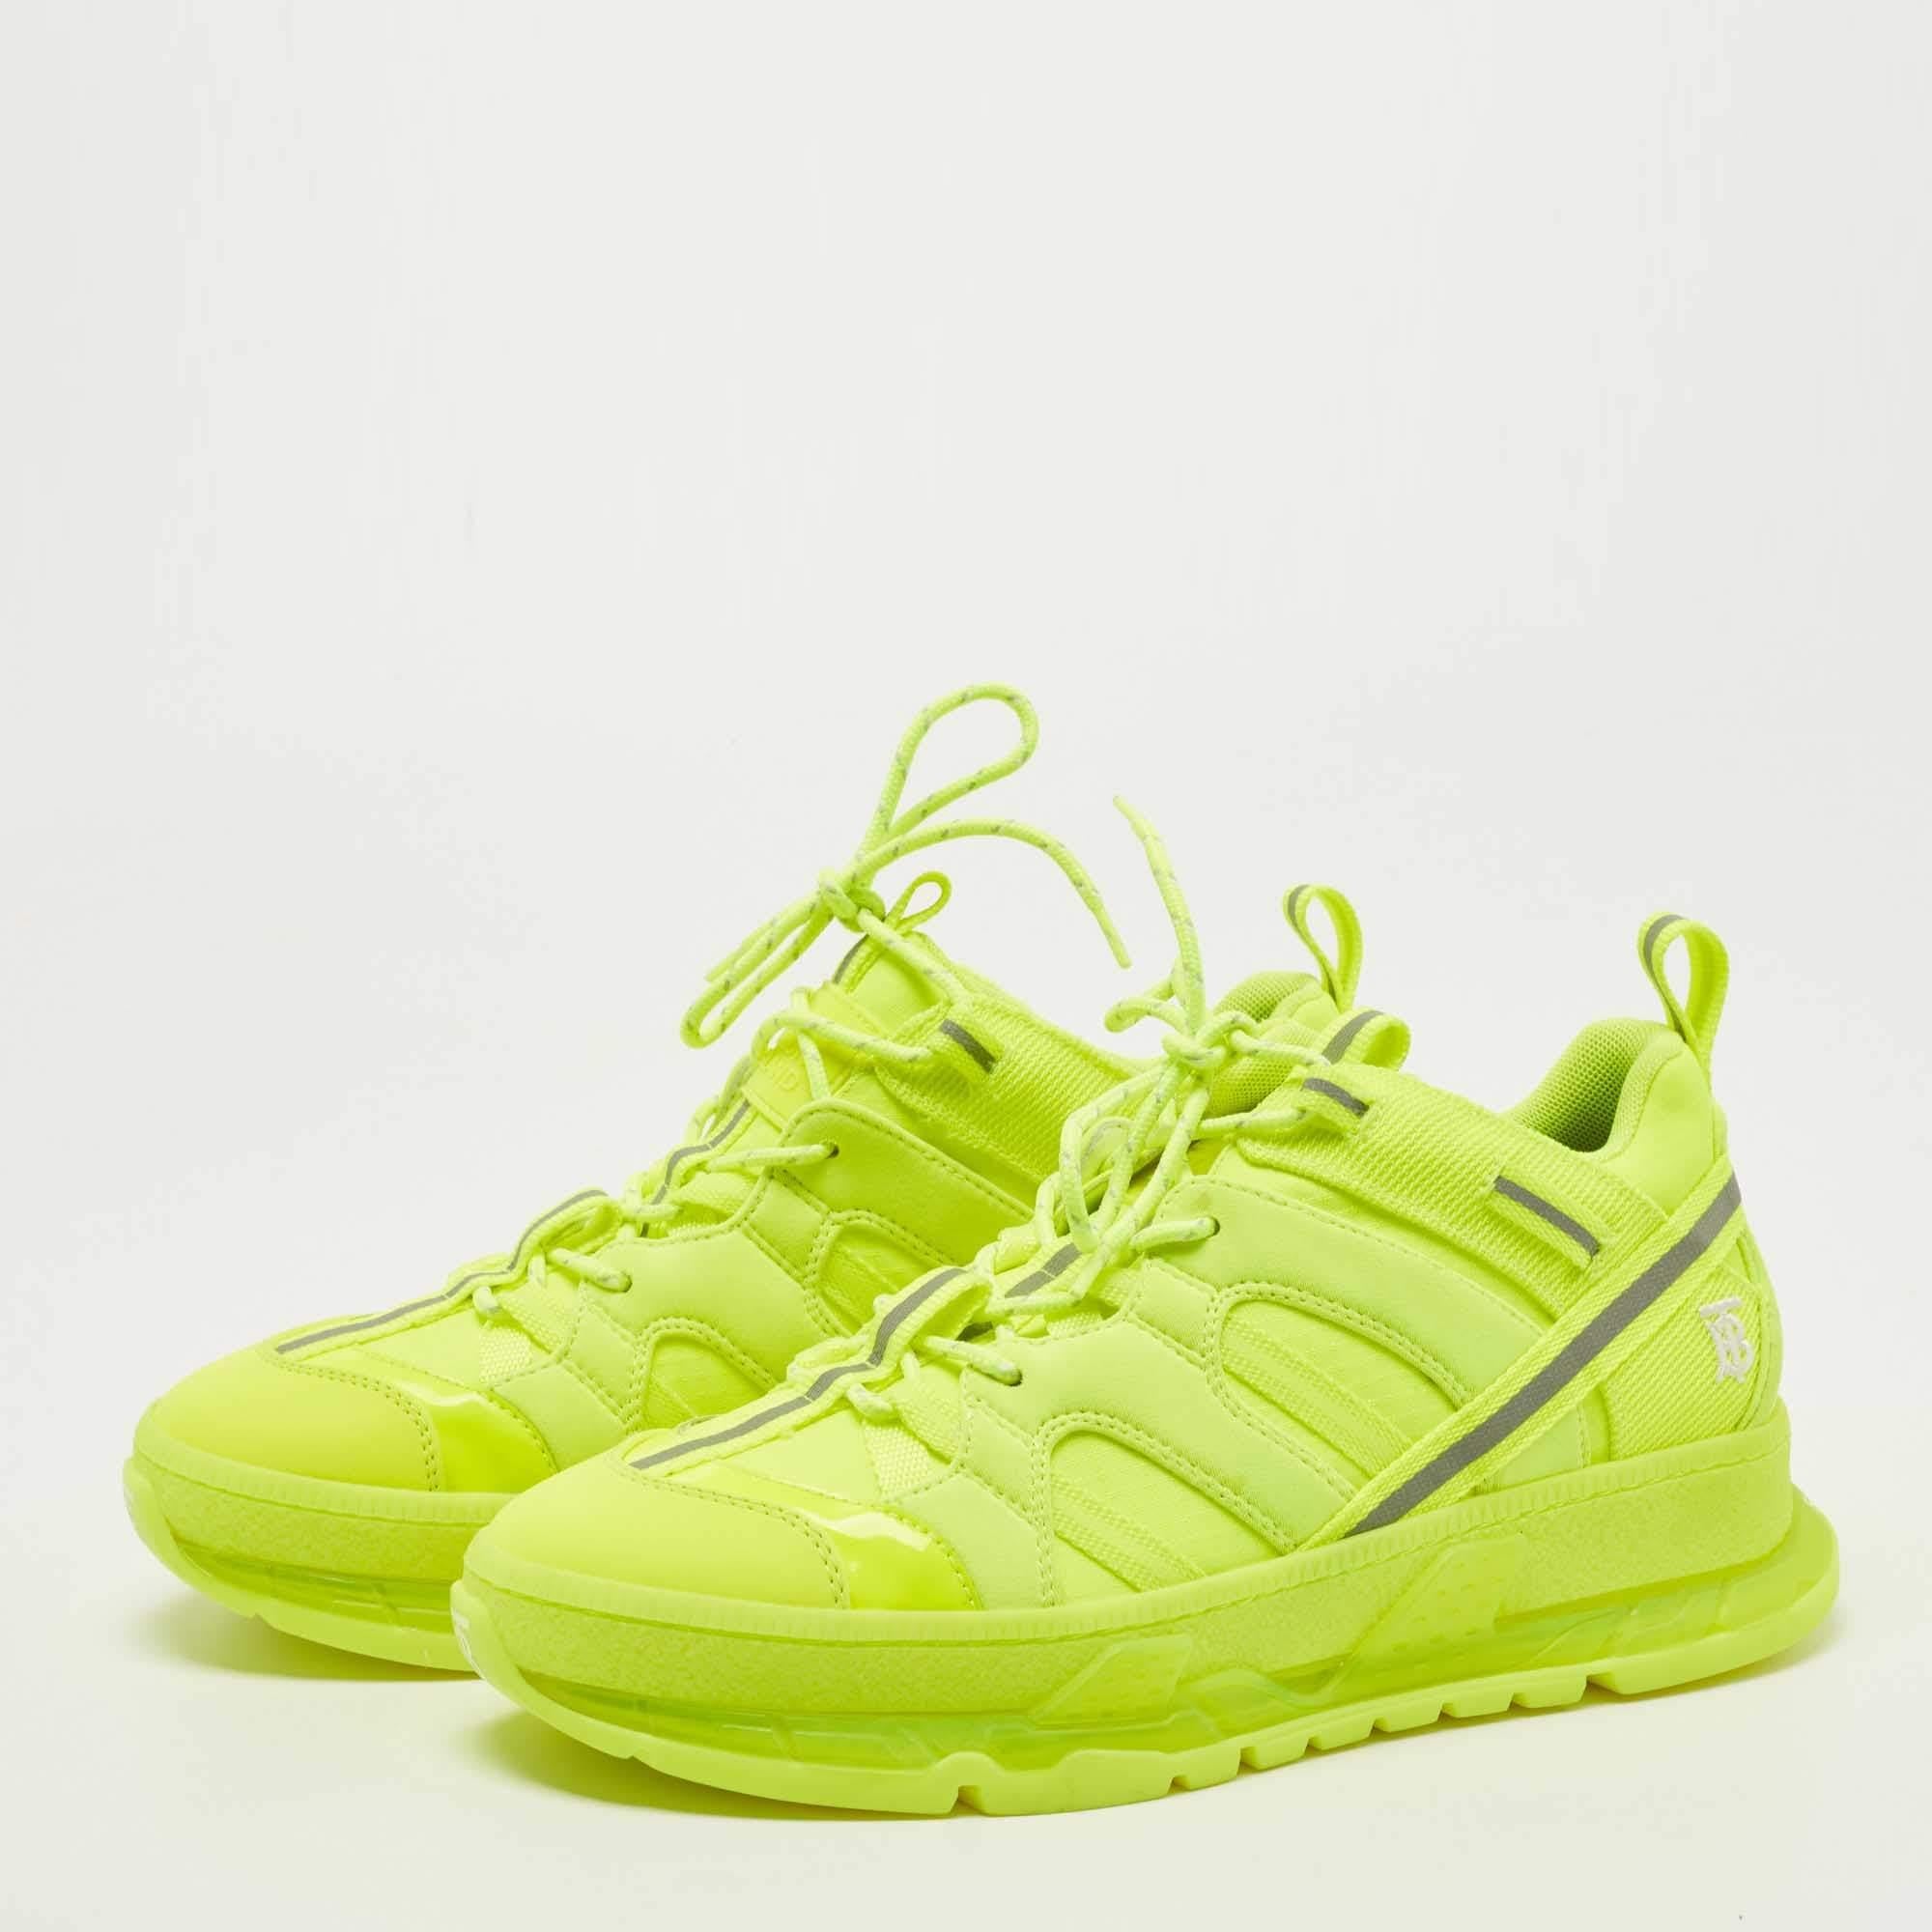 neon yellow trainers